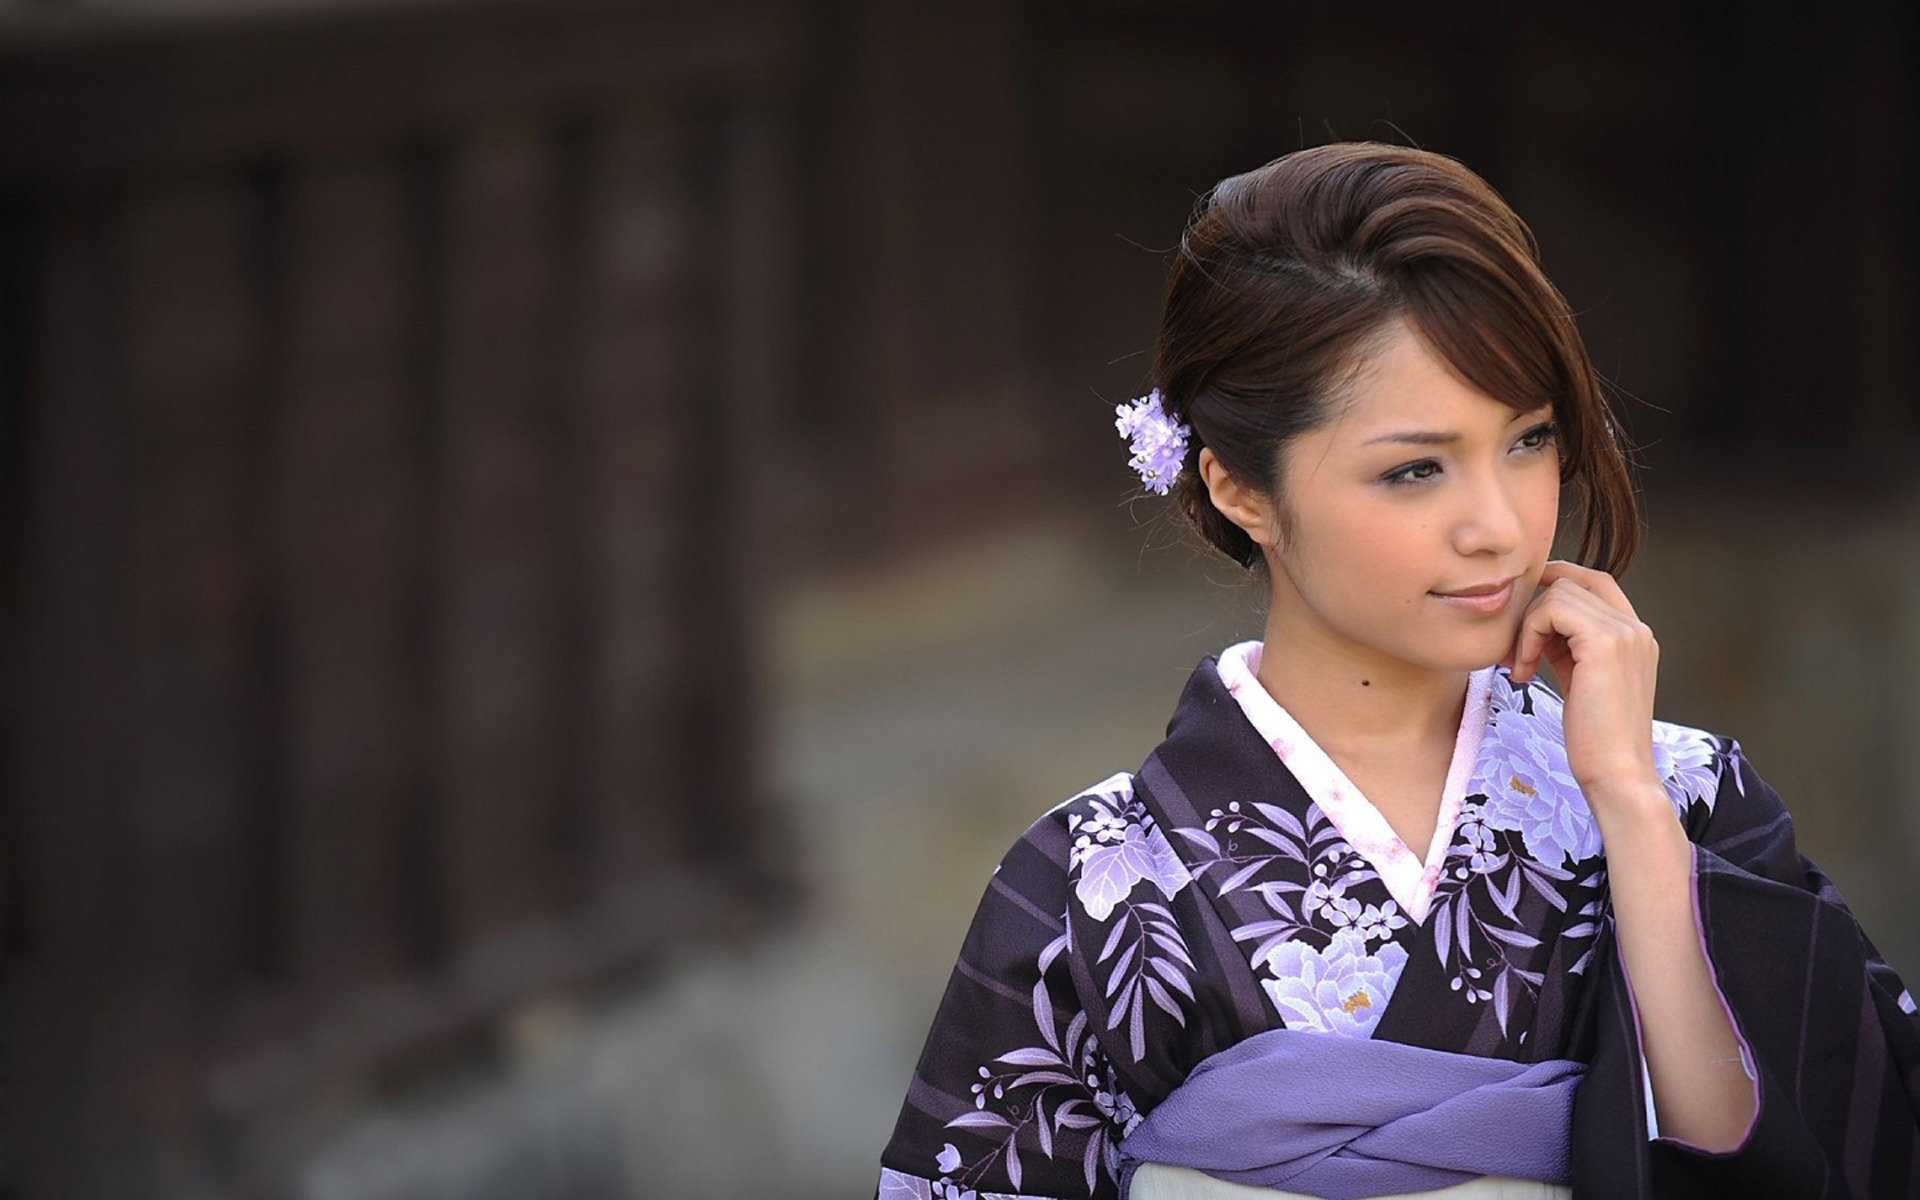 Japanese Teen Kimono